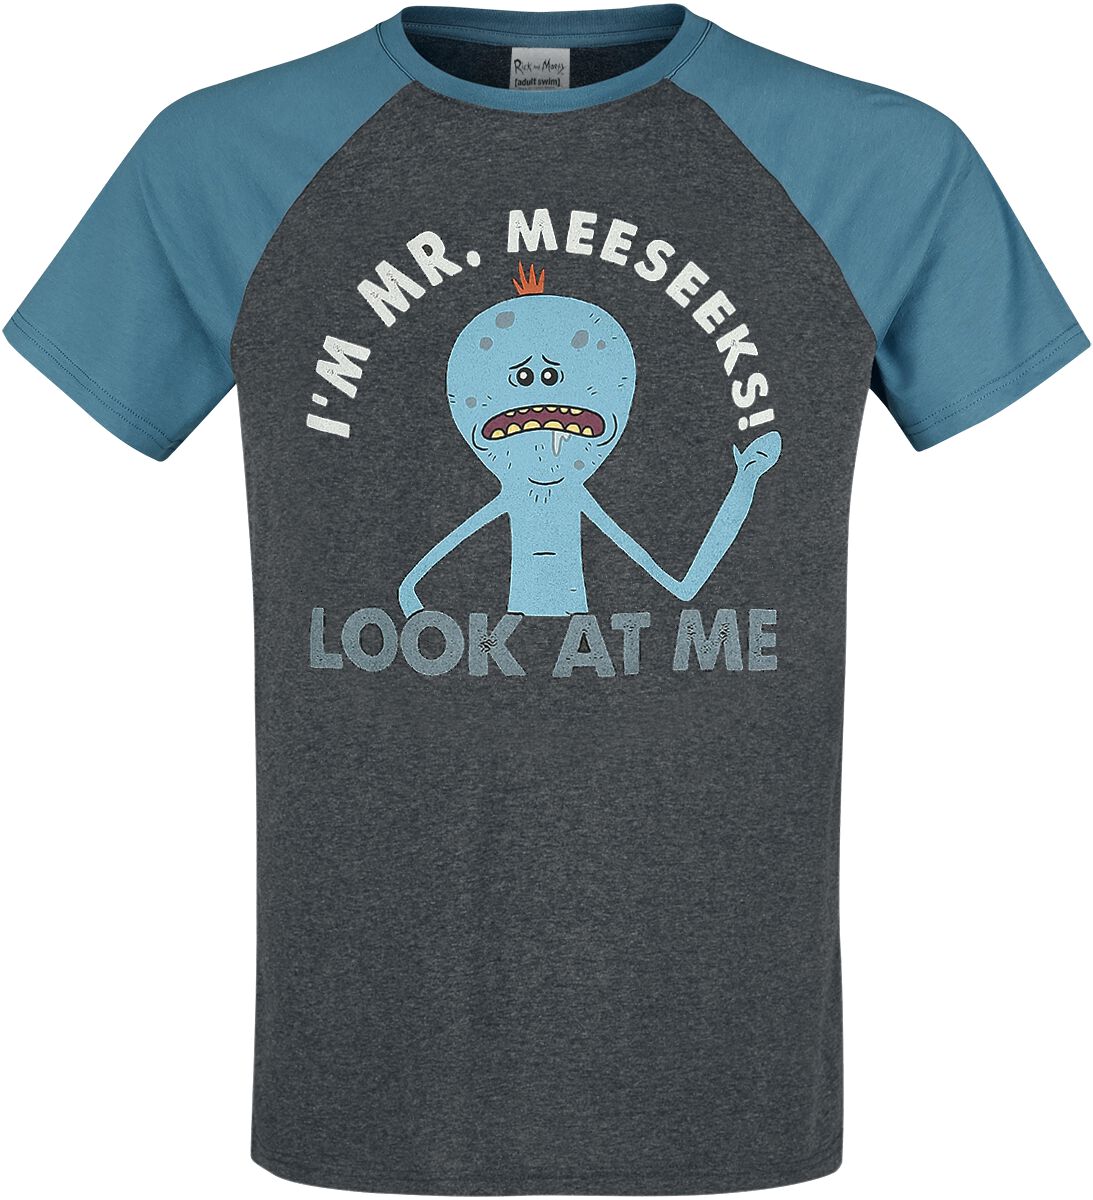 Rick And Morty Mr. Meeseeks T-Shirt black blue